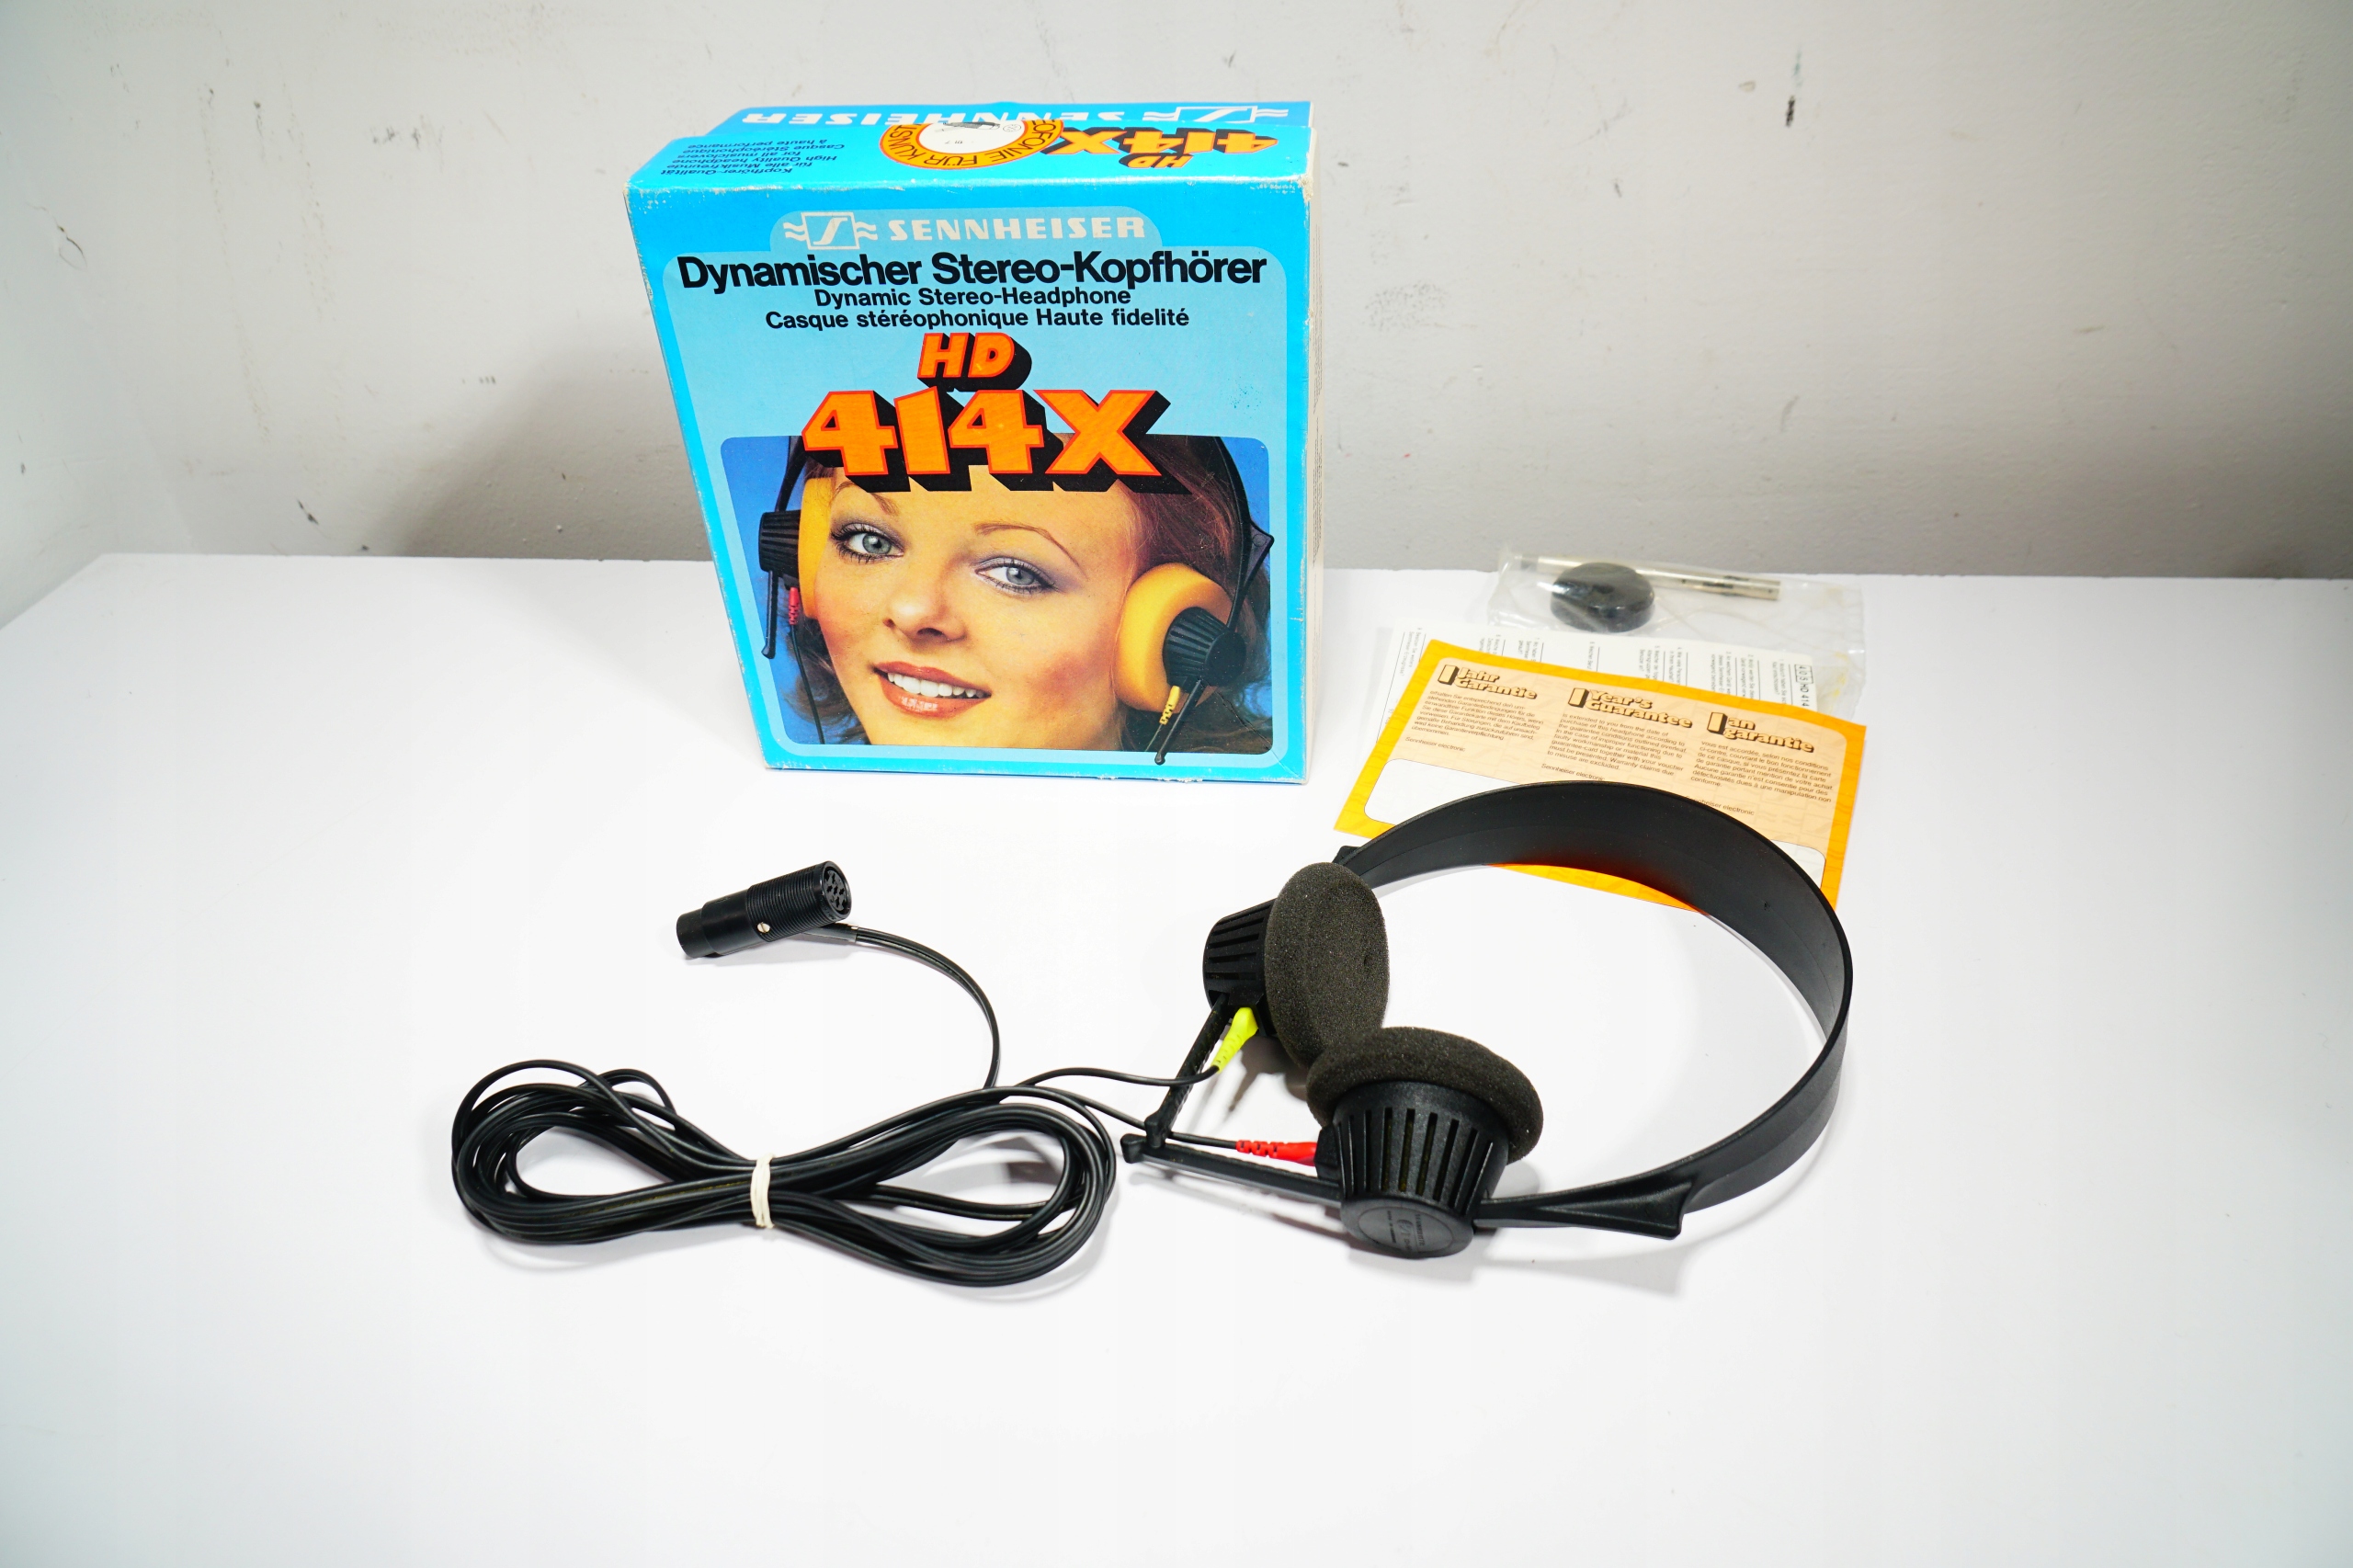 Retro Słuchawki nauszne Sennheiser HD 414X